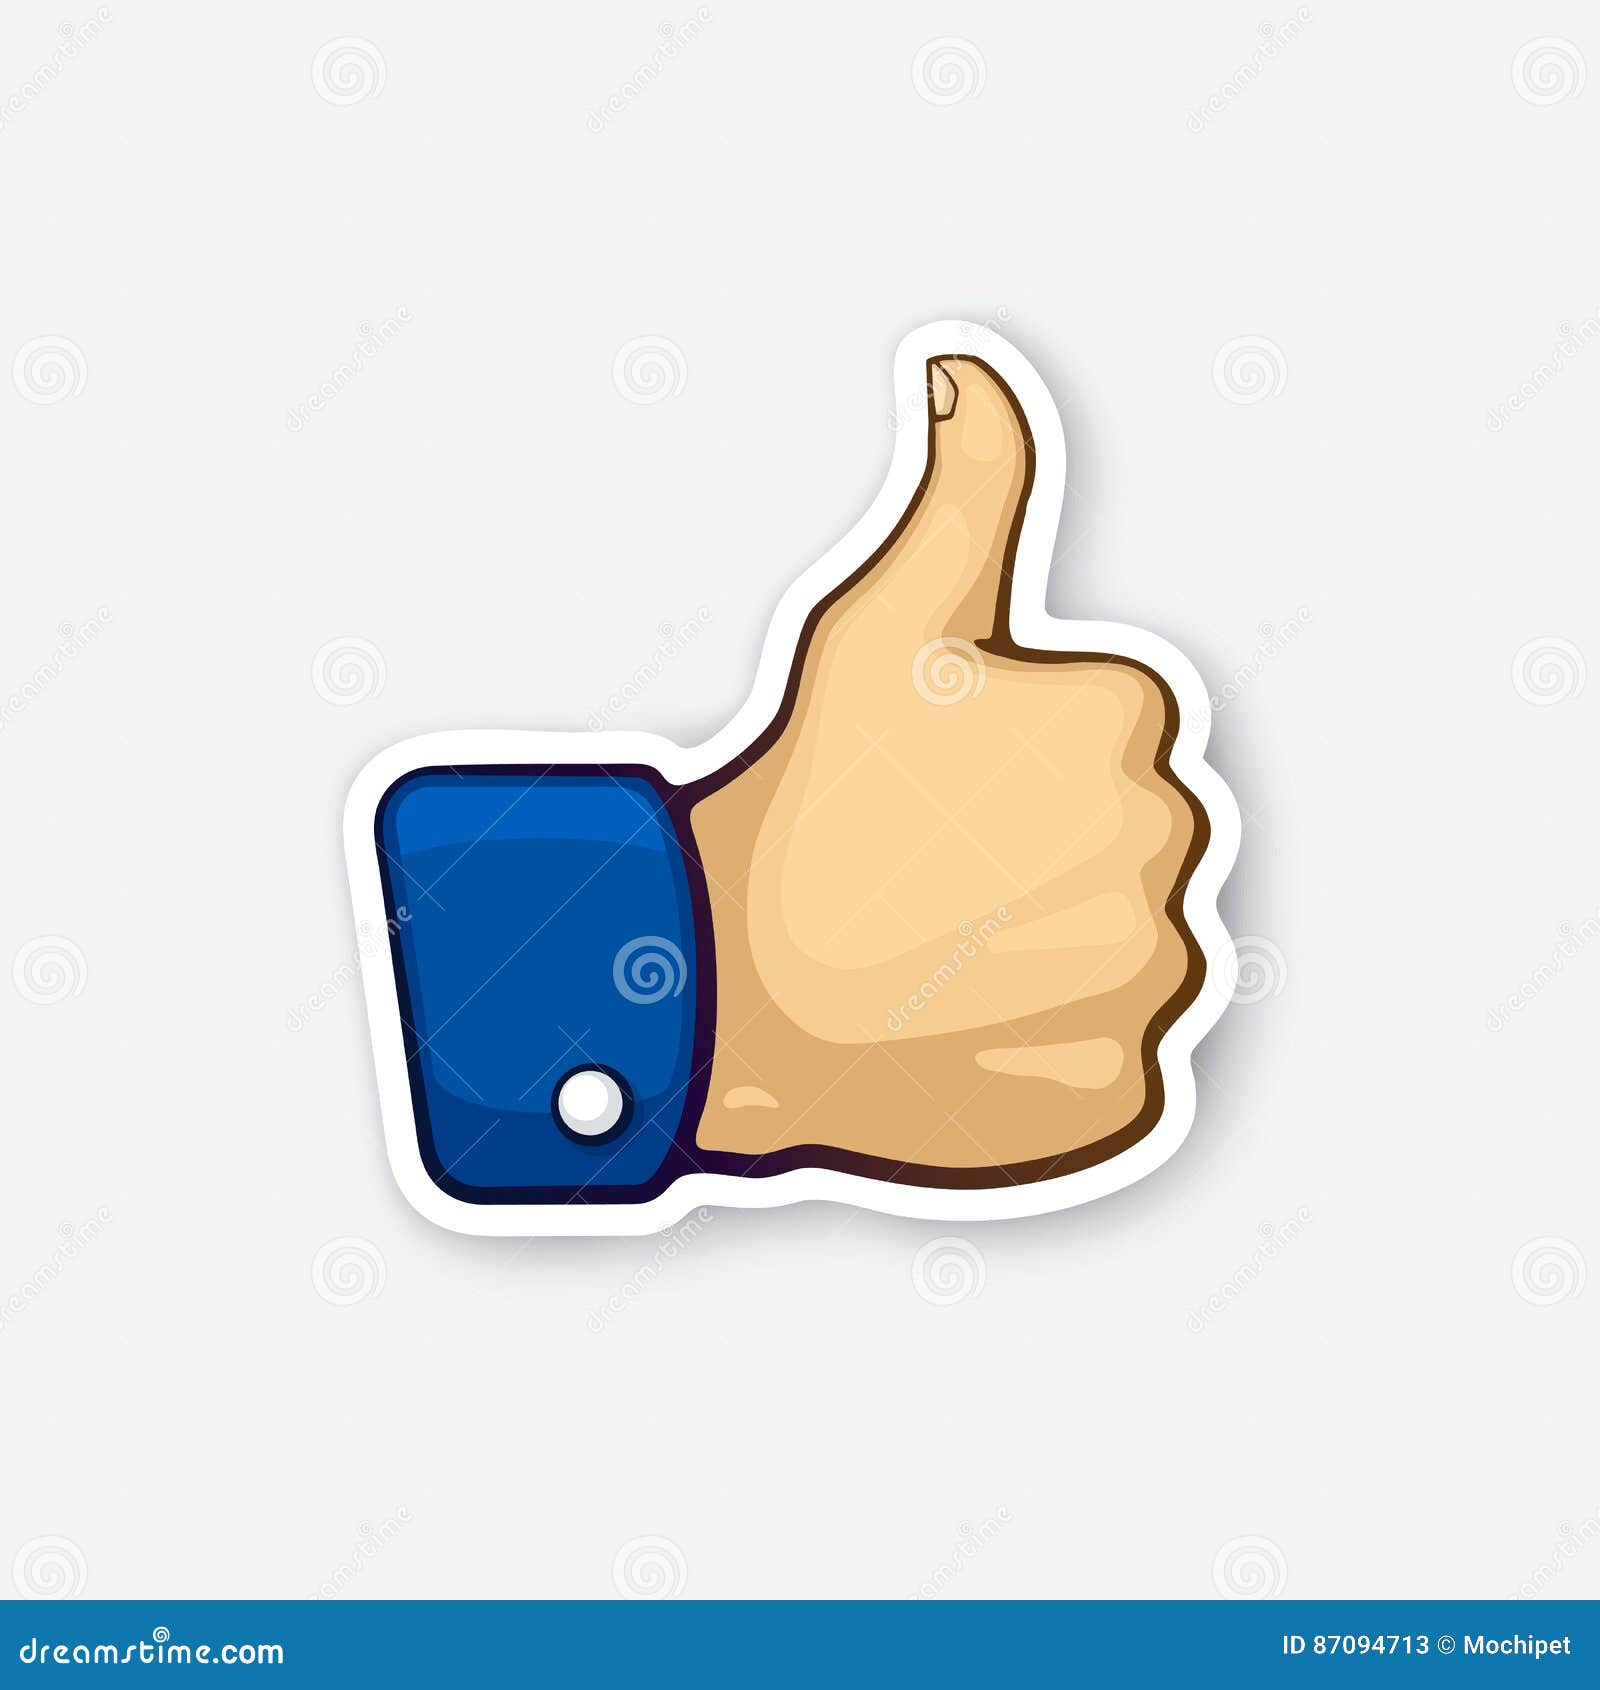 sticker thumb up  of like